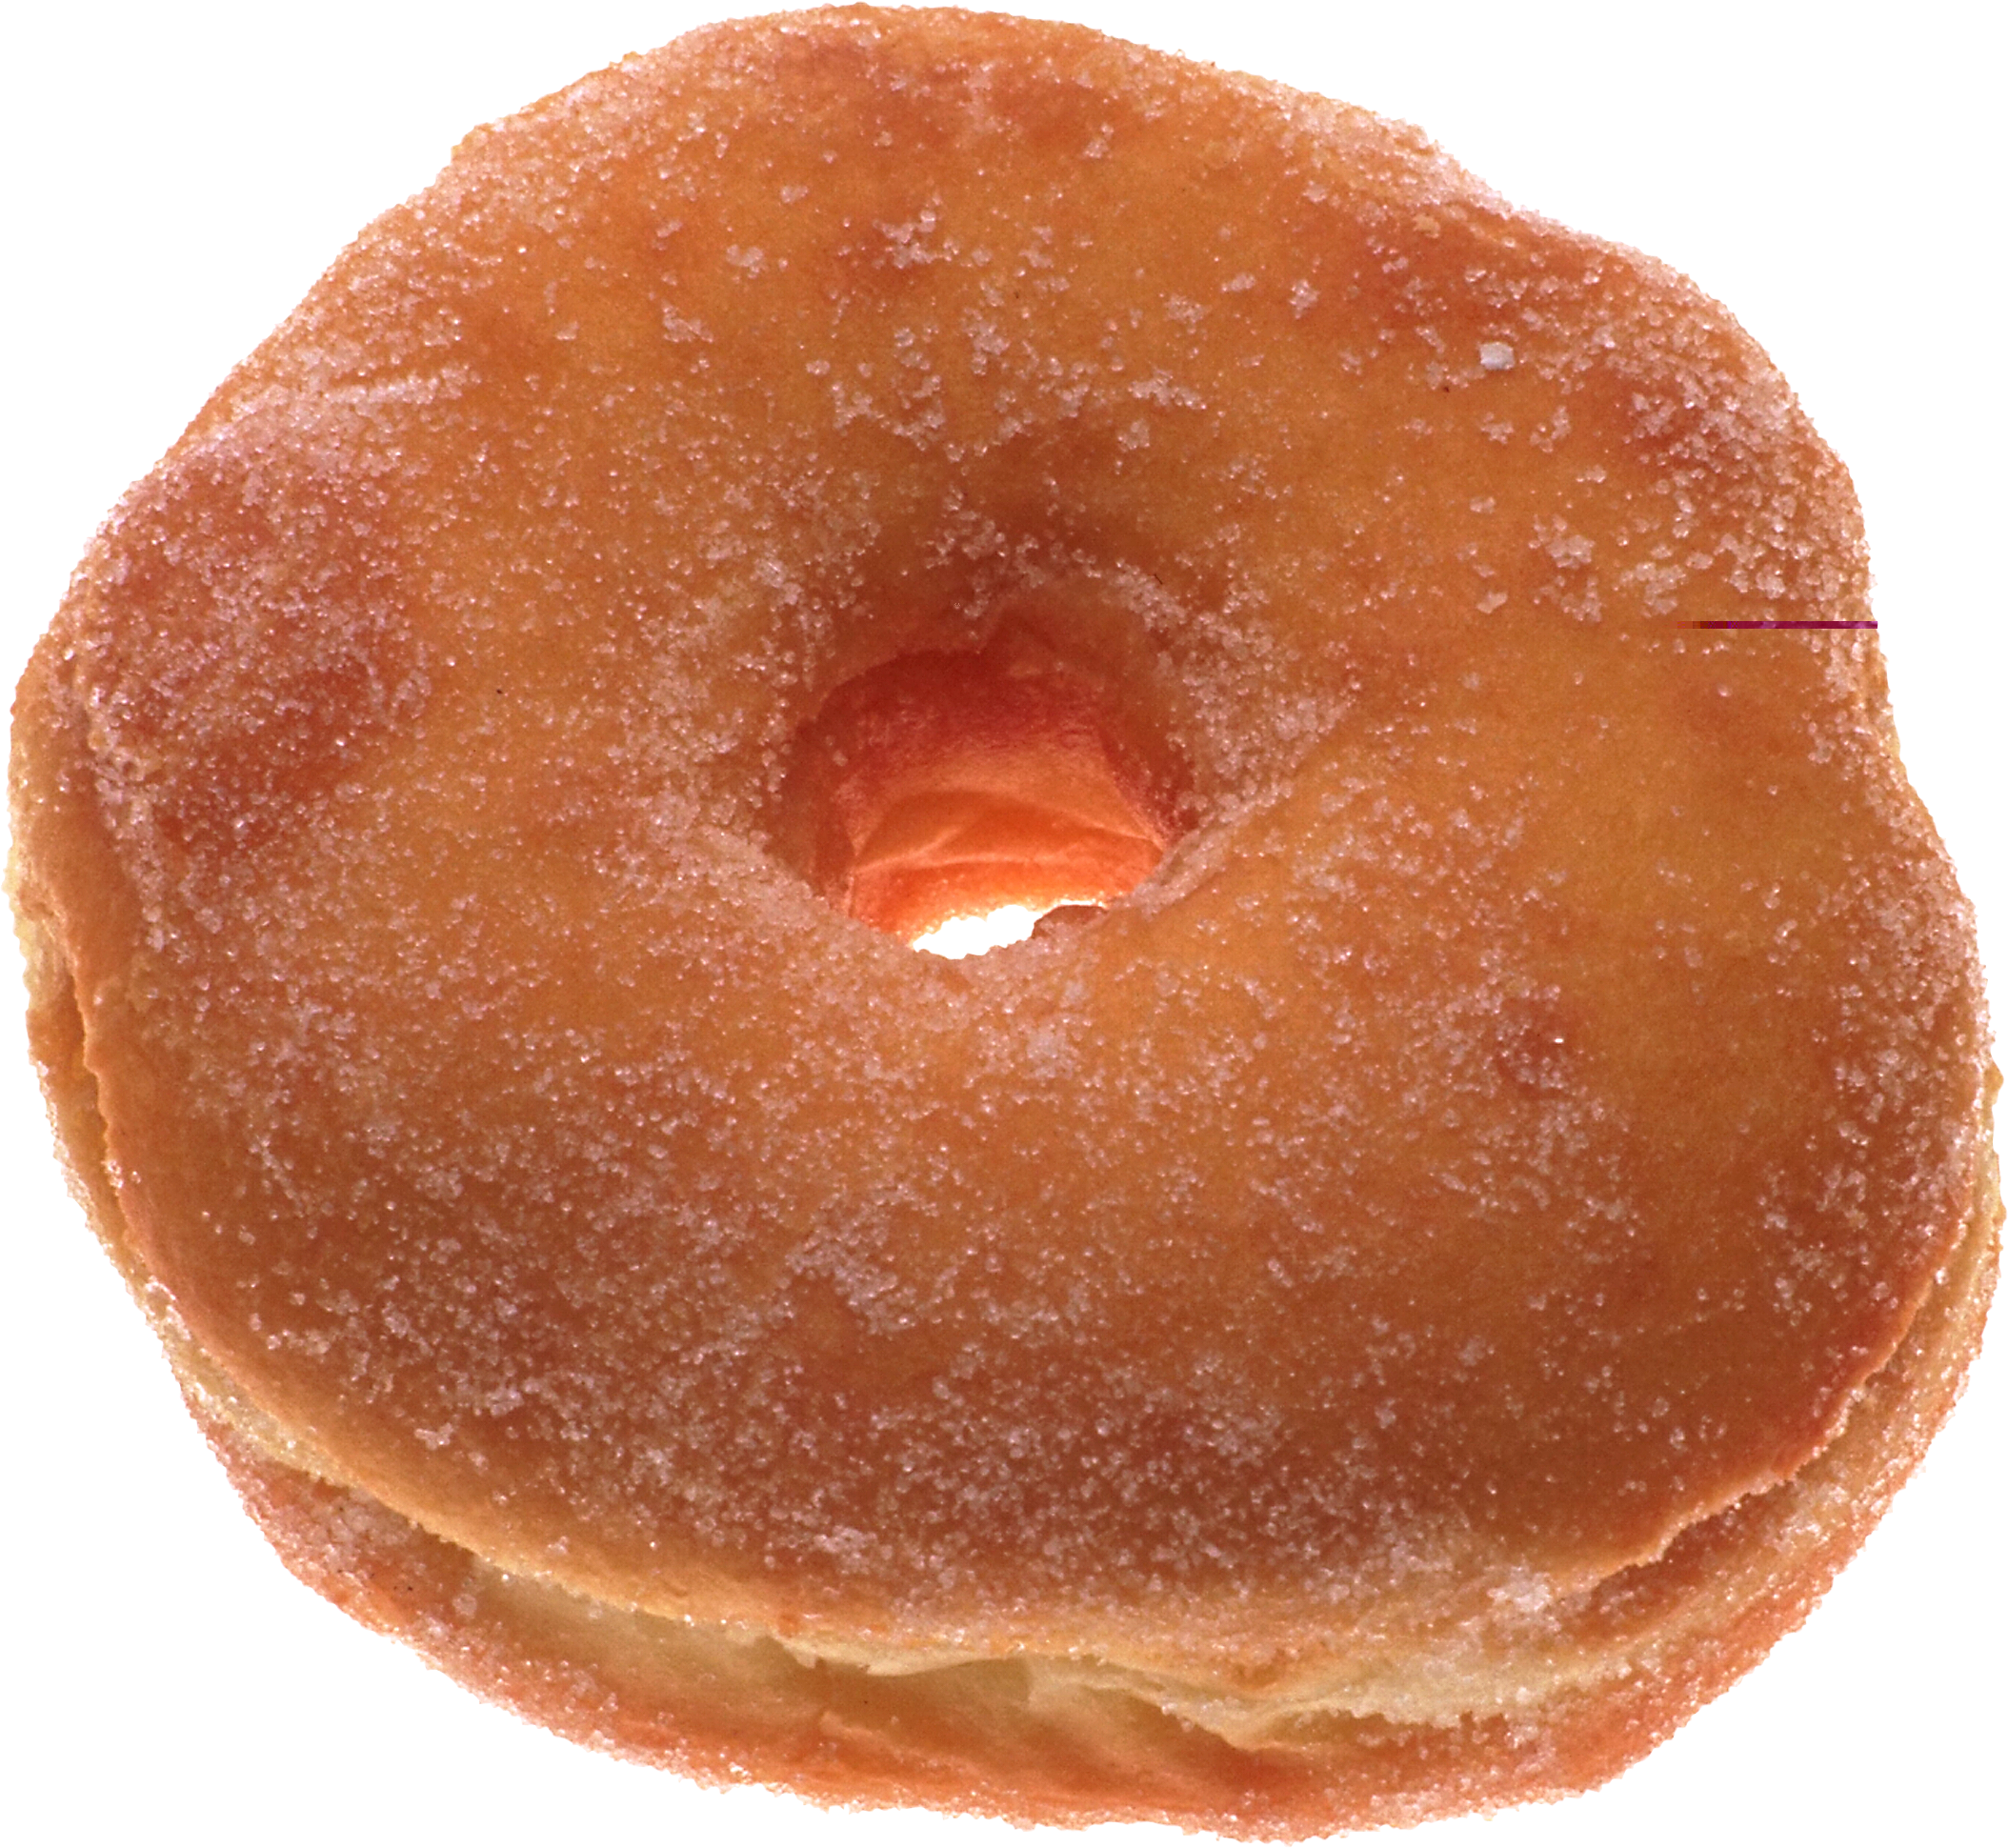 doughnut clipart cider donuts